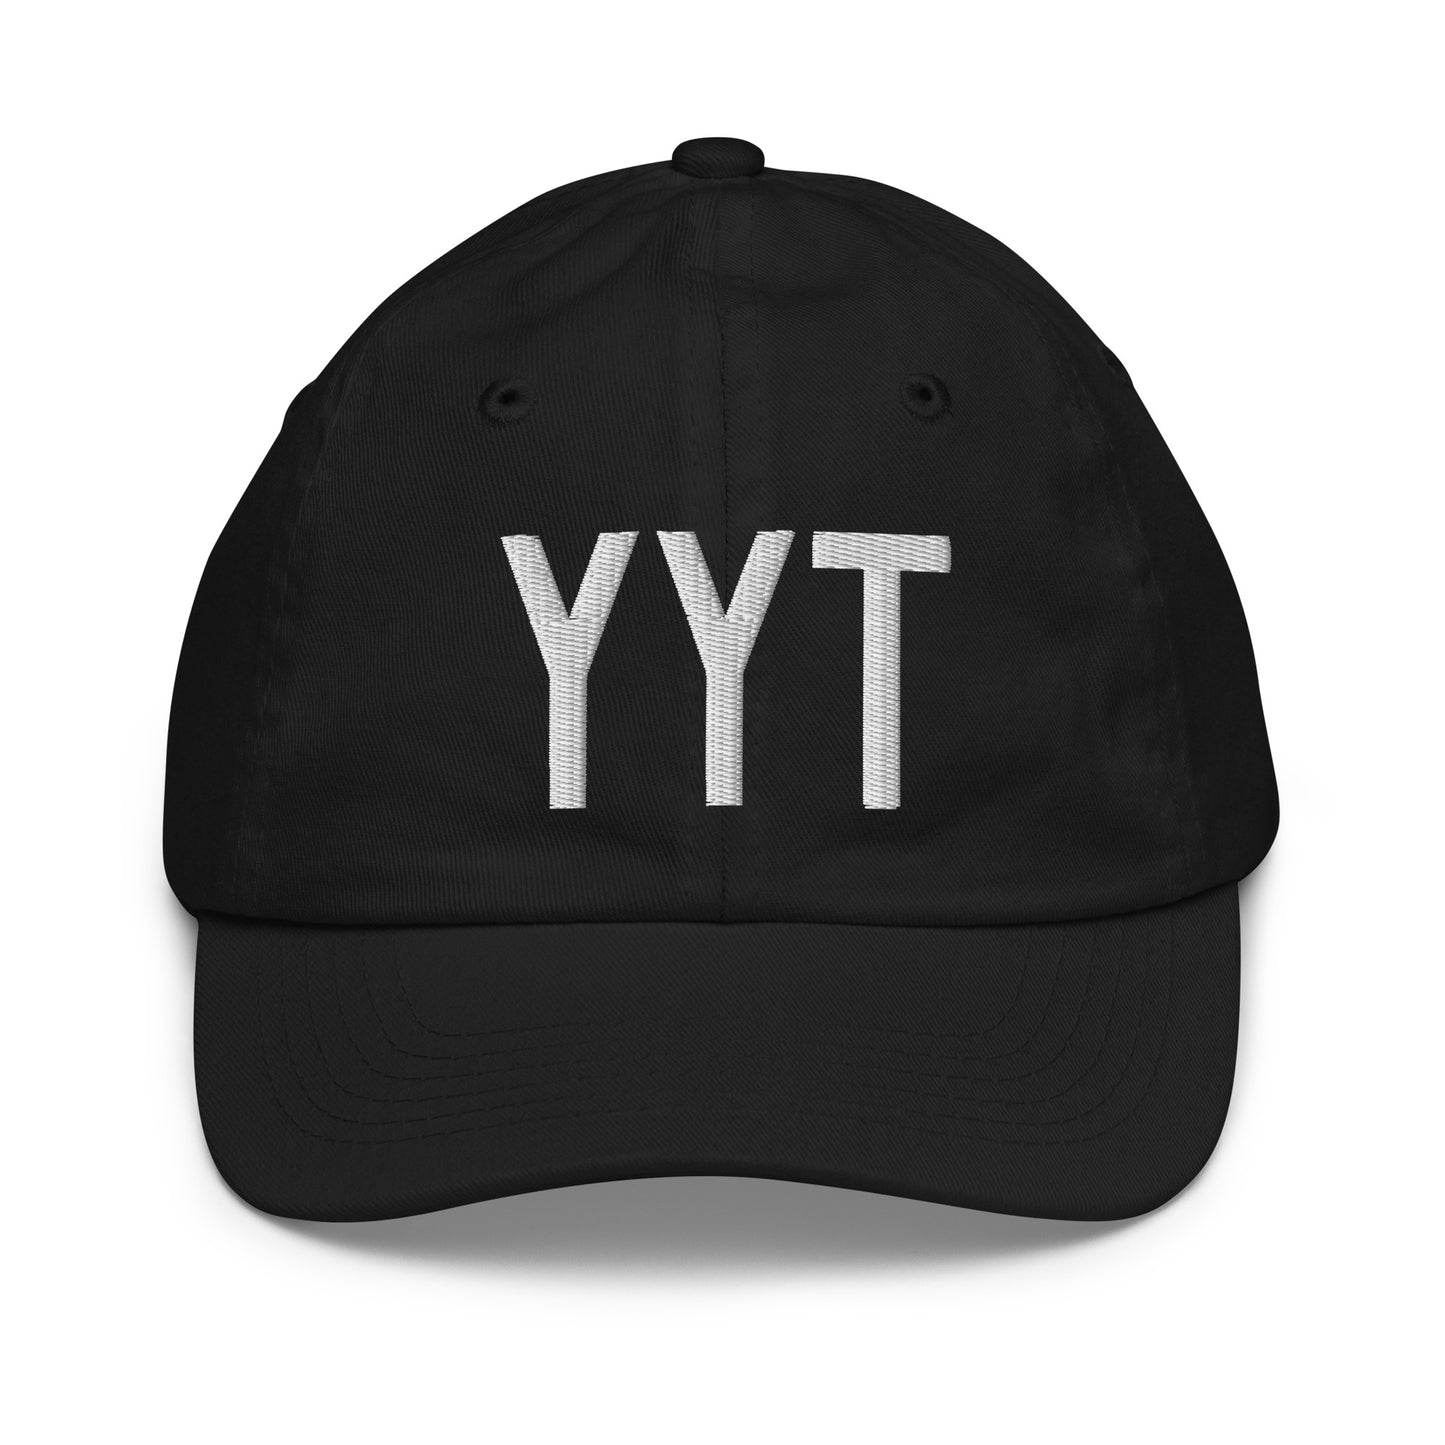 Airport Code Kid's Baseball Cap - White • YYT St. John's • YHM Designs - Image 11